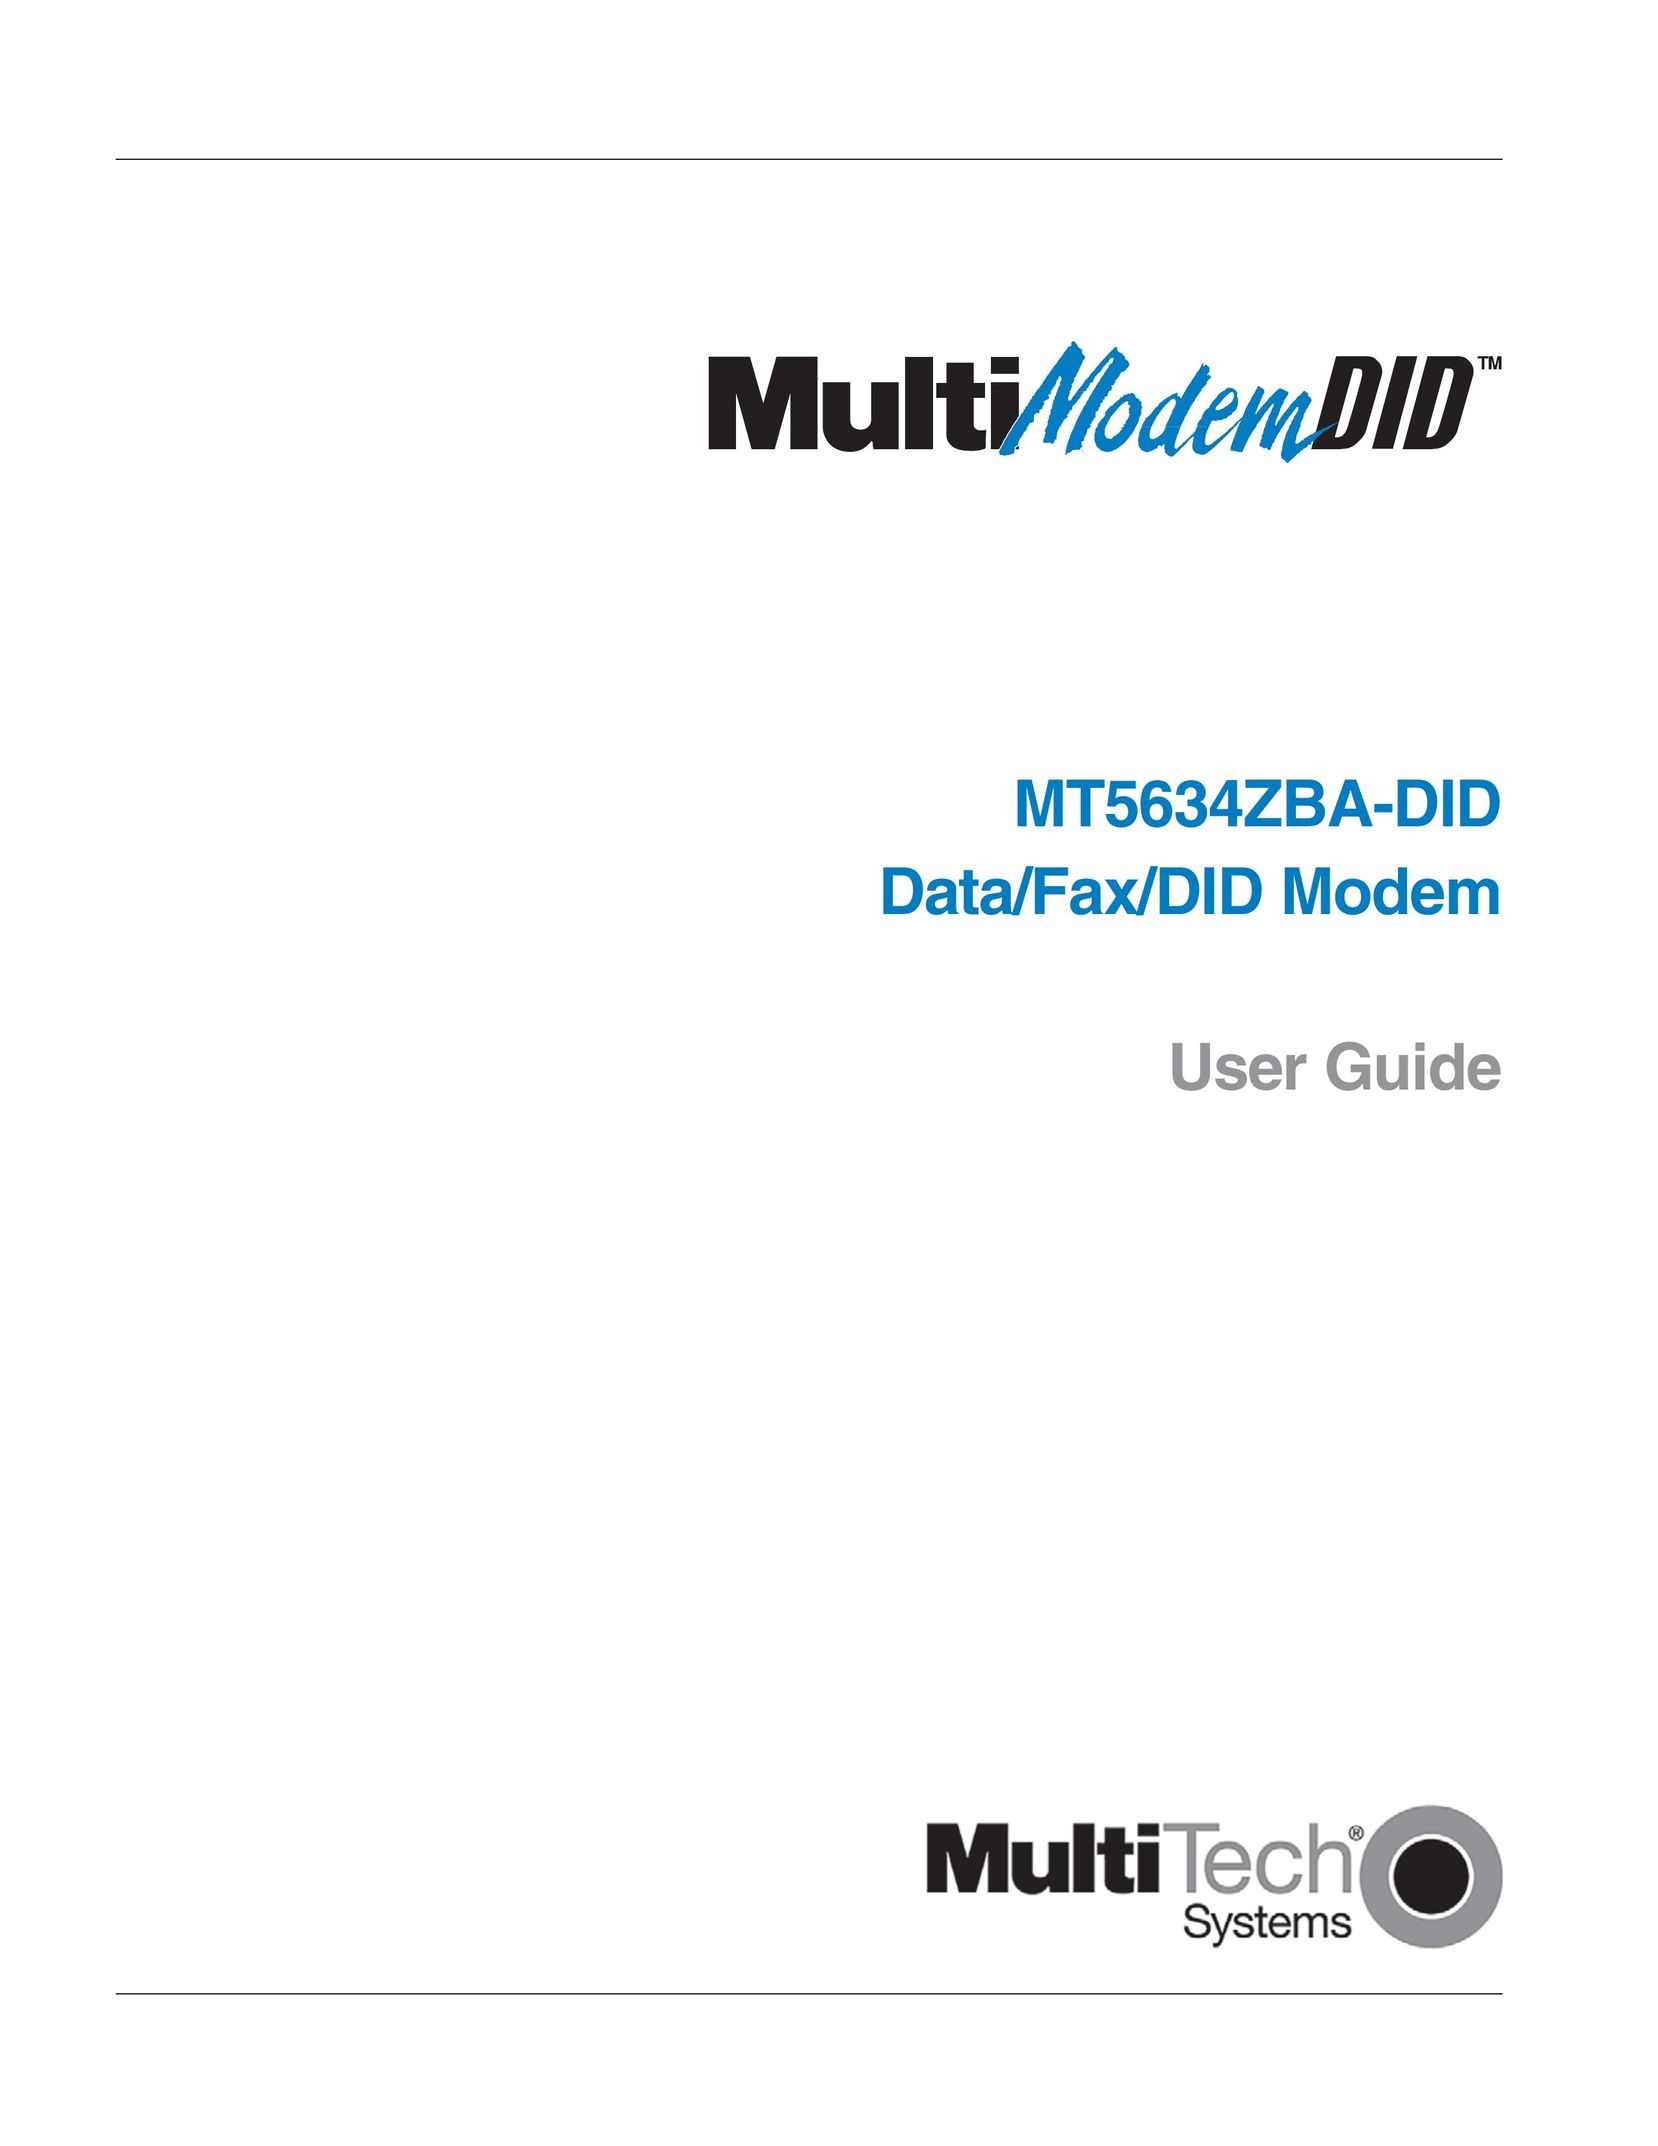 Multi-Tech Systems MT5634ZBA-DID Modem User Manual